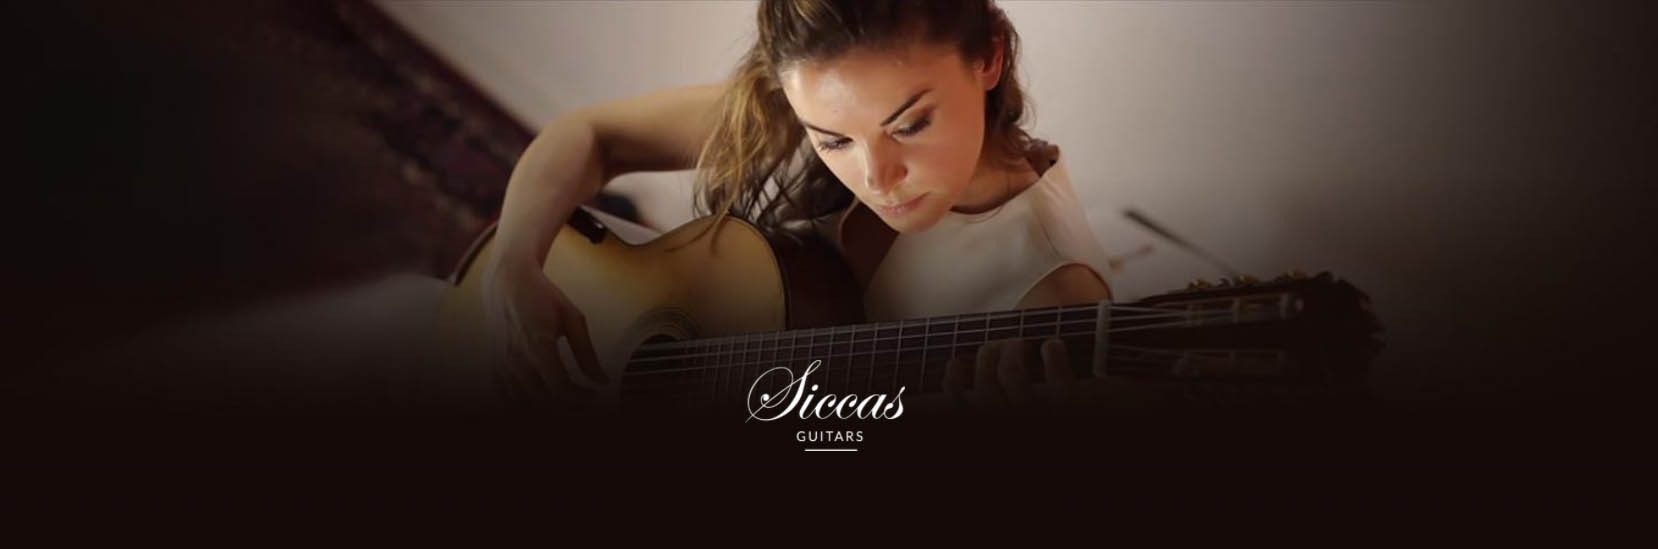 Siccas Guitars Ana Vidovic